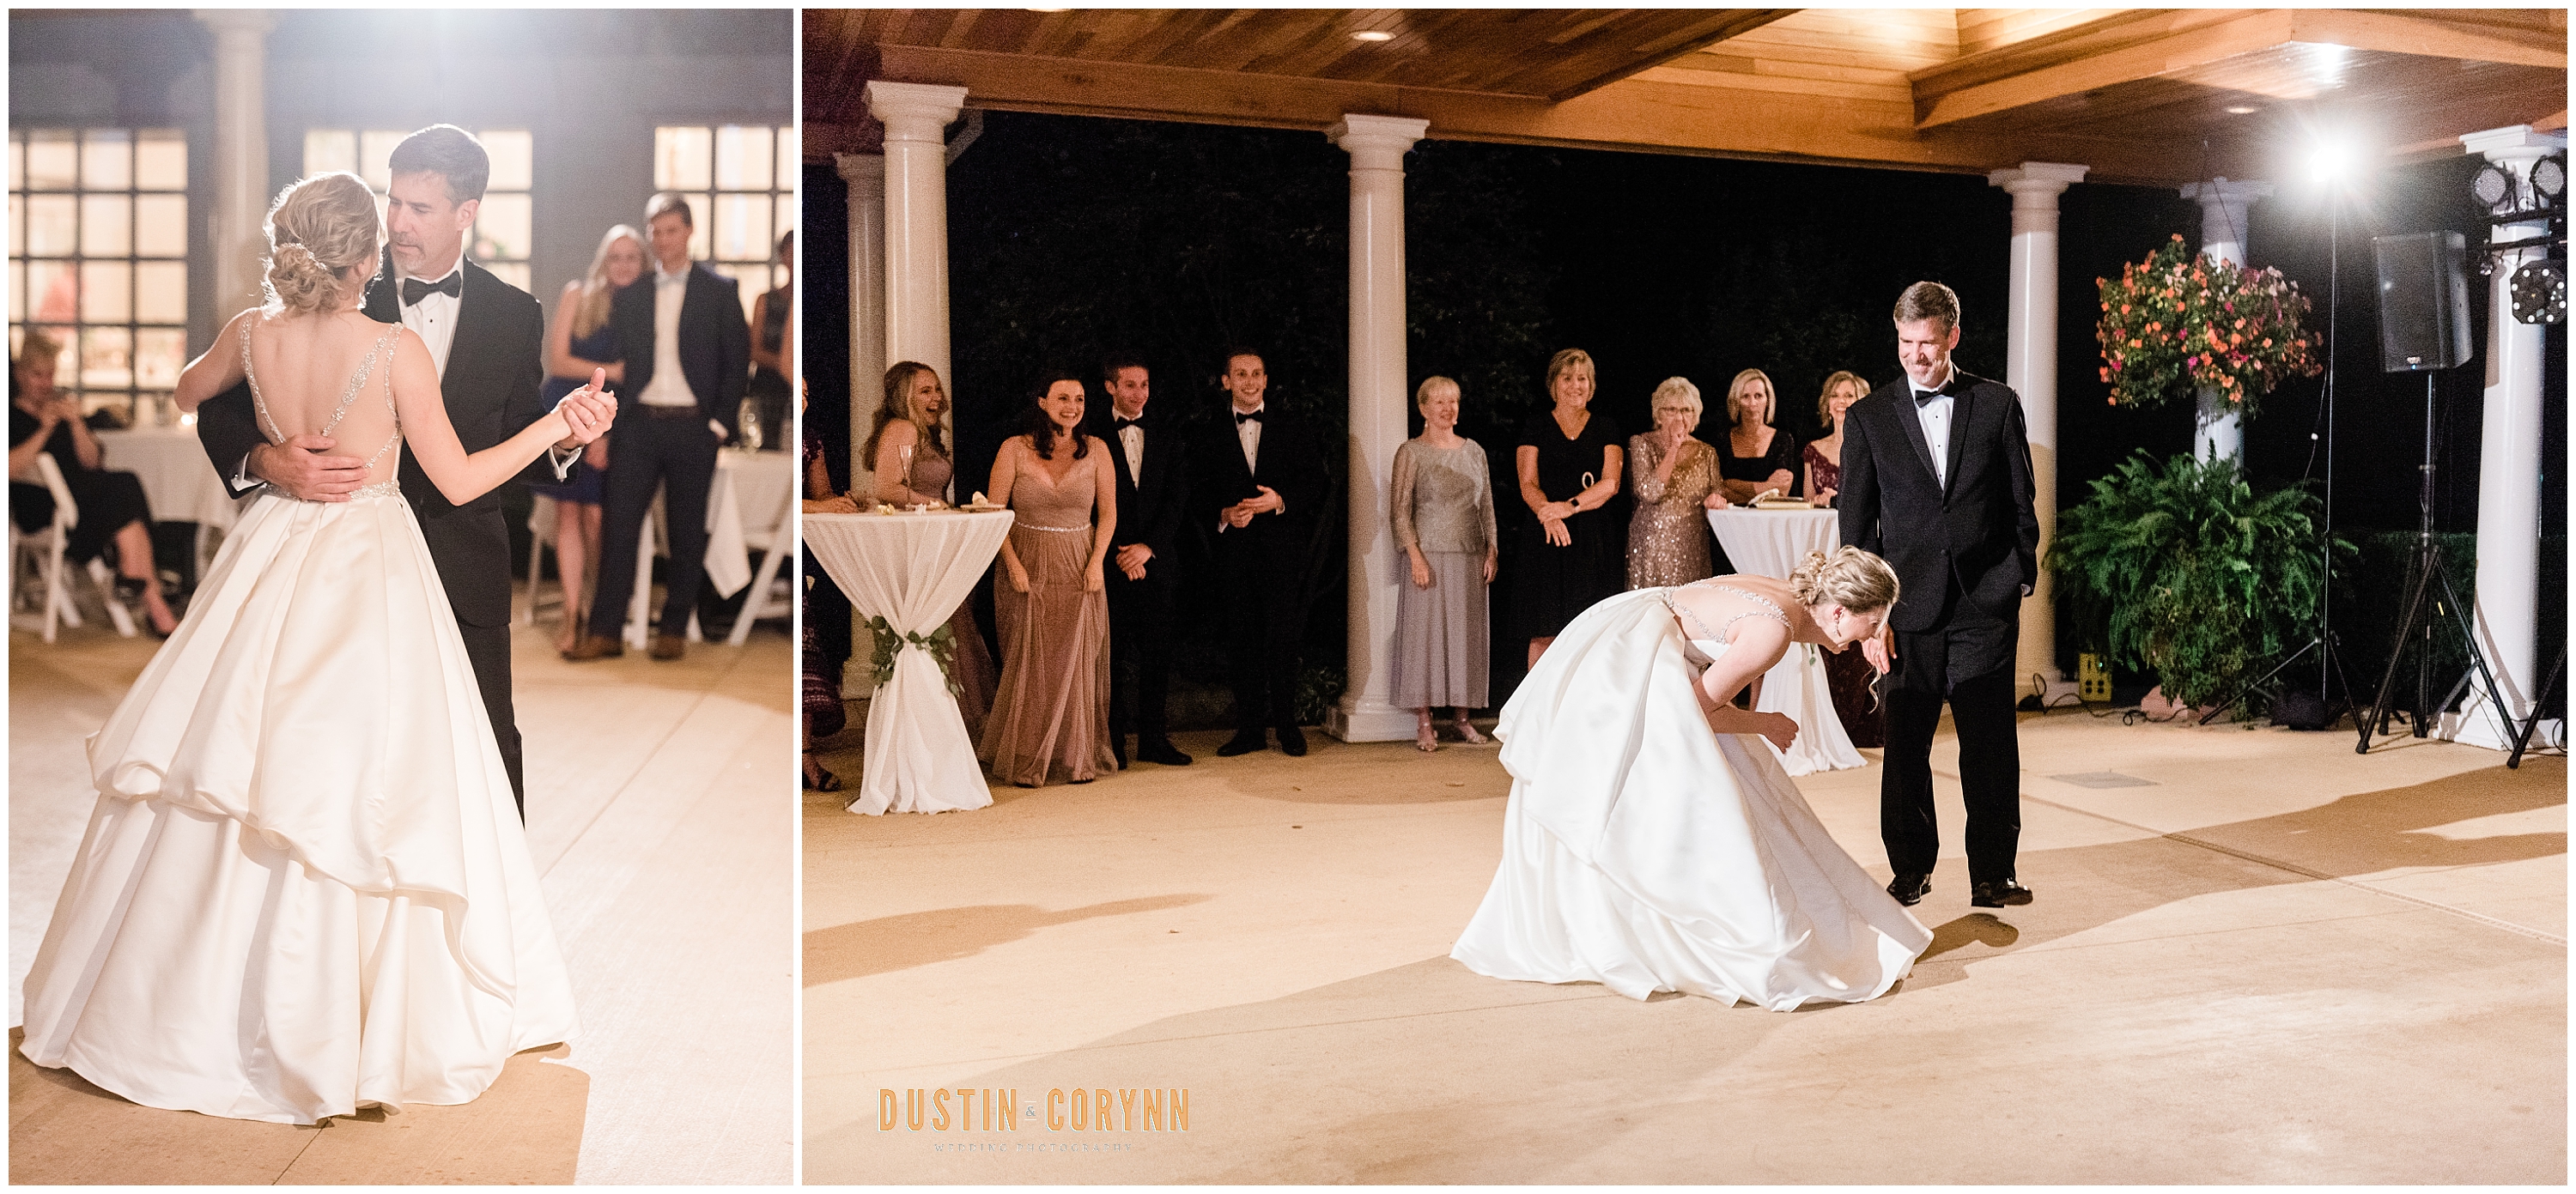 Fort Wayne wedding photographer captures first dance at Sycamore Hills Golf Club reception